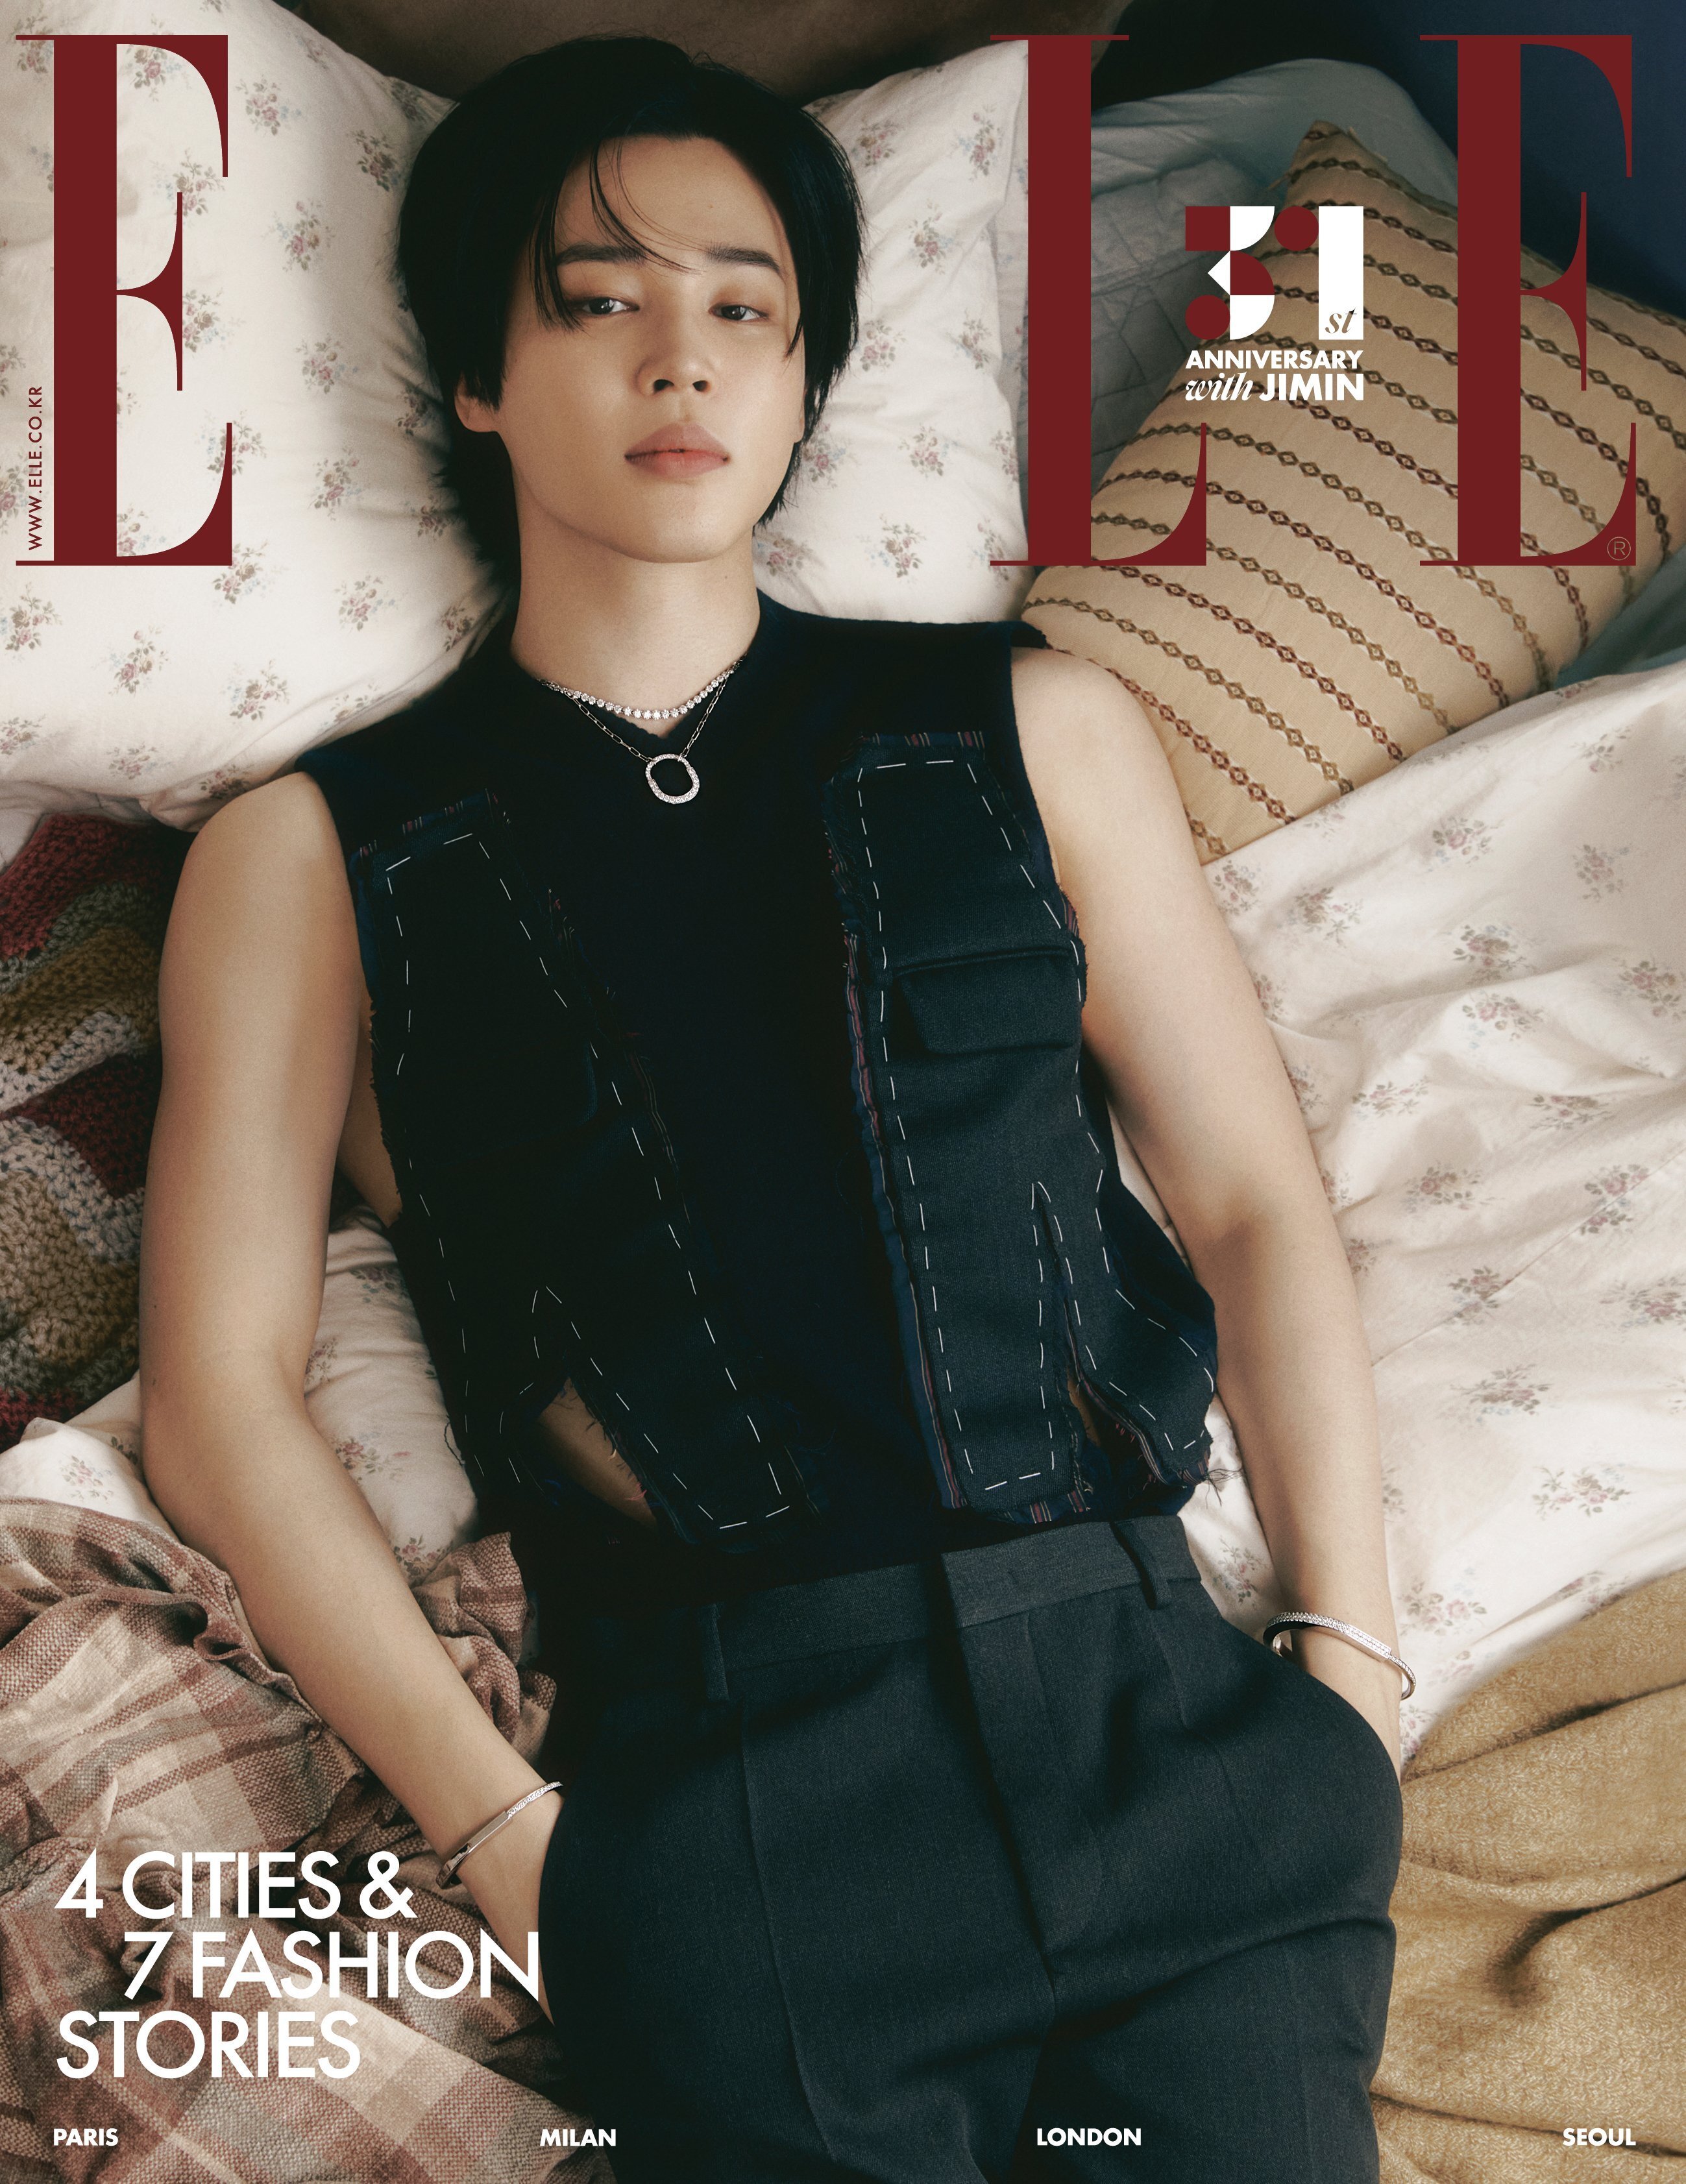 Jimin of BTS is a total hottie in Vogue Korea cover